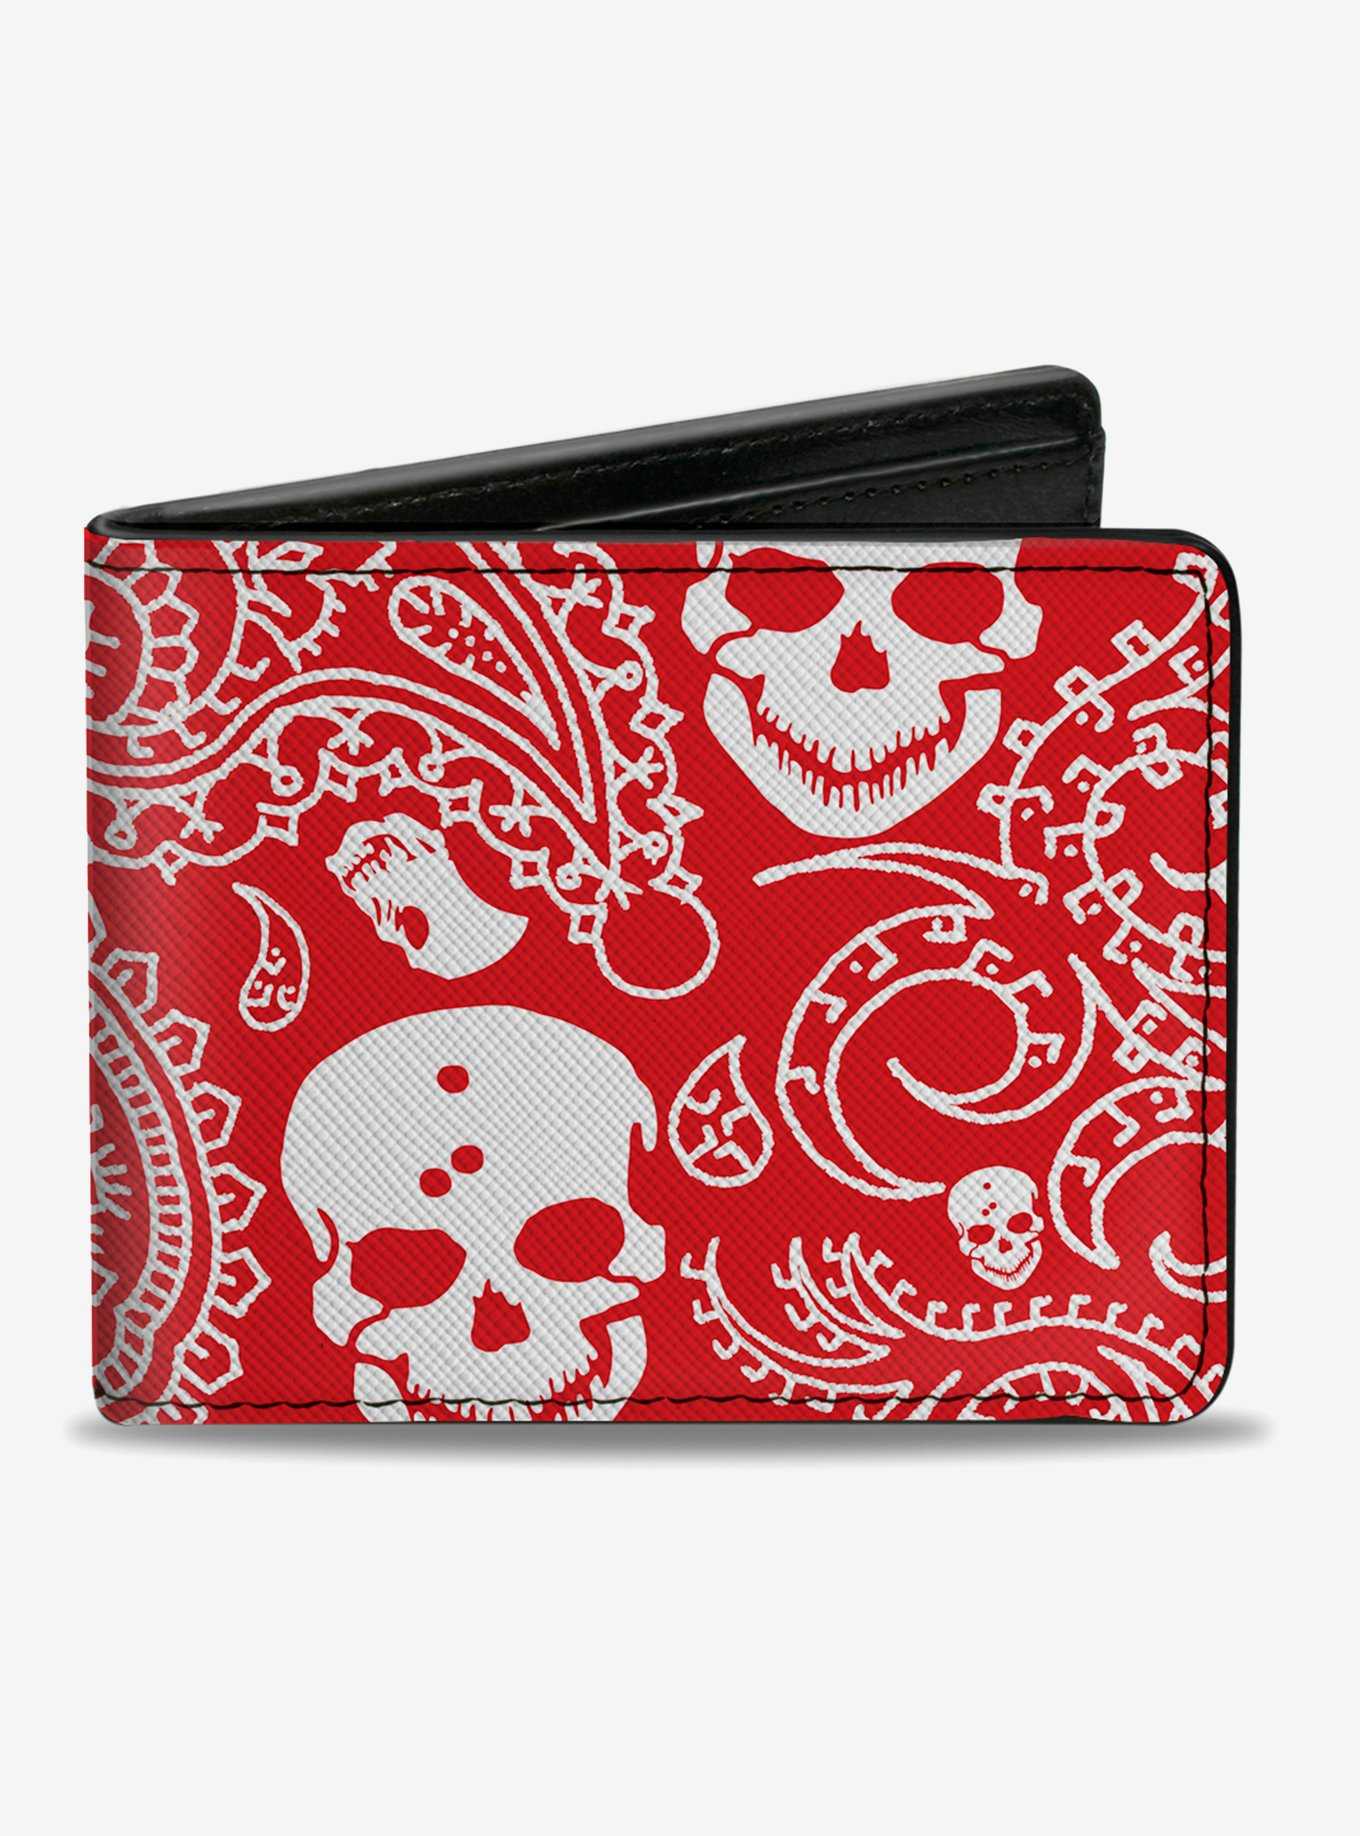 Bandana Skull Print Bifold Wallet Red White, , hi-res